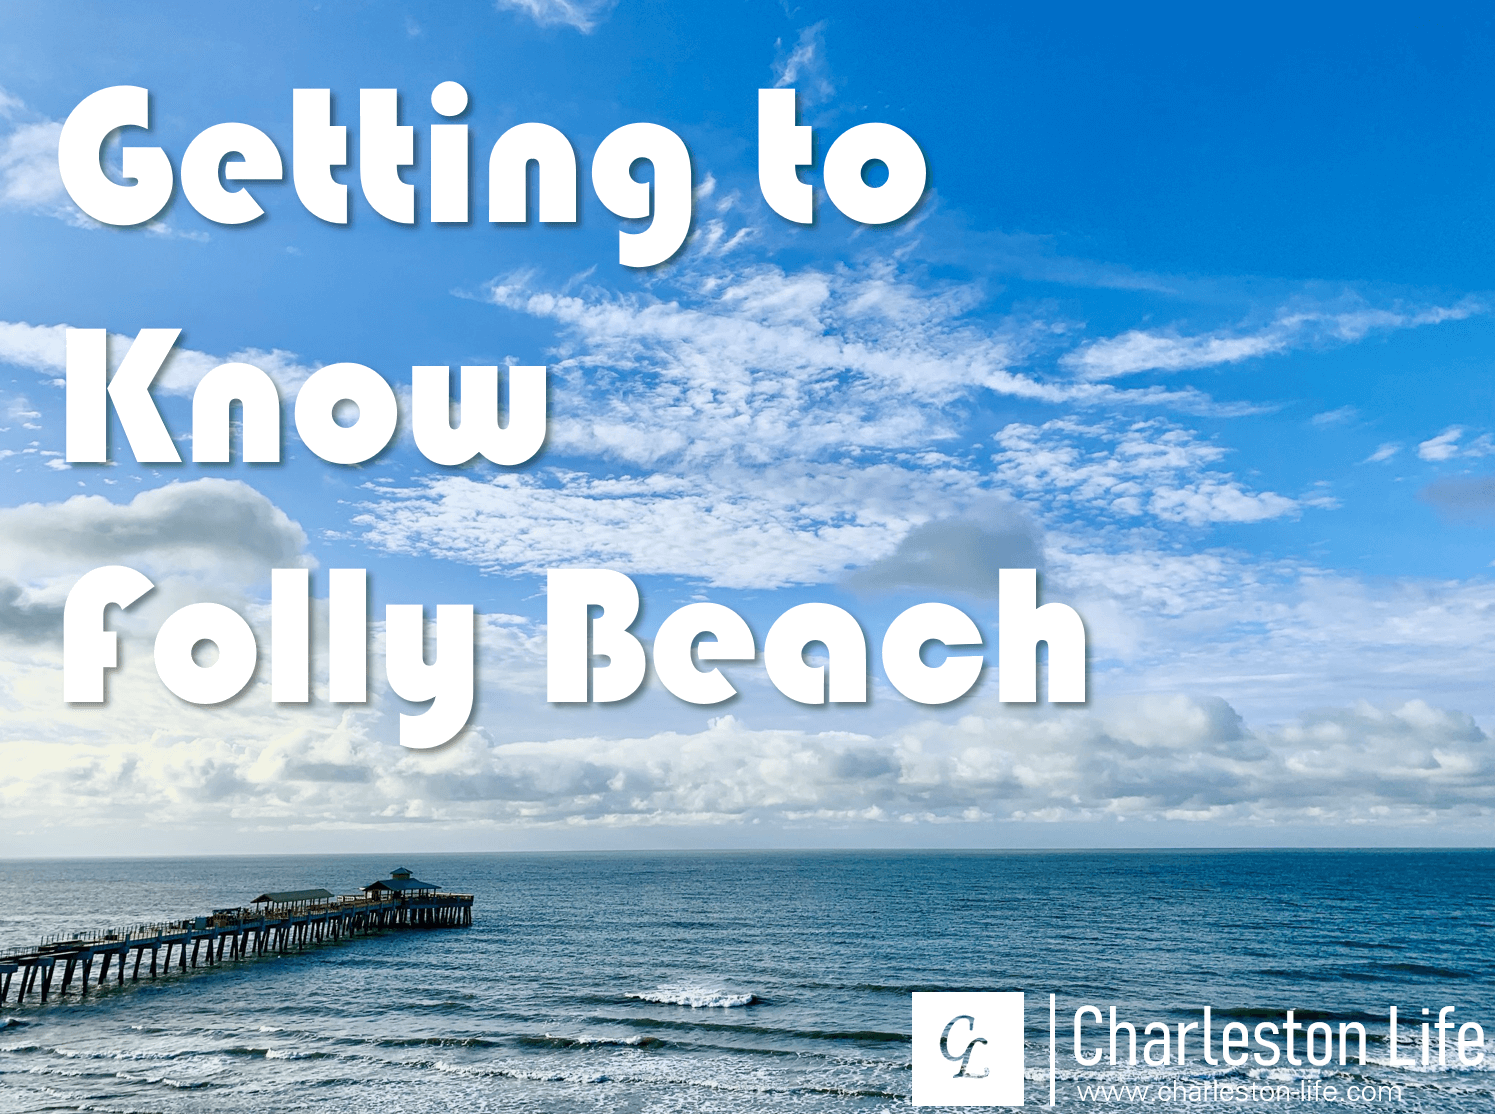 Guide to Folly Beach